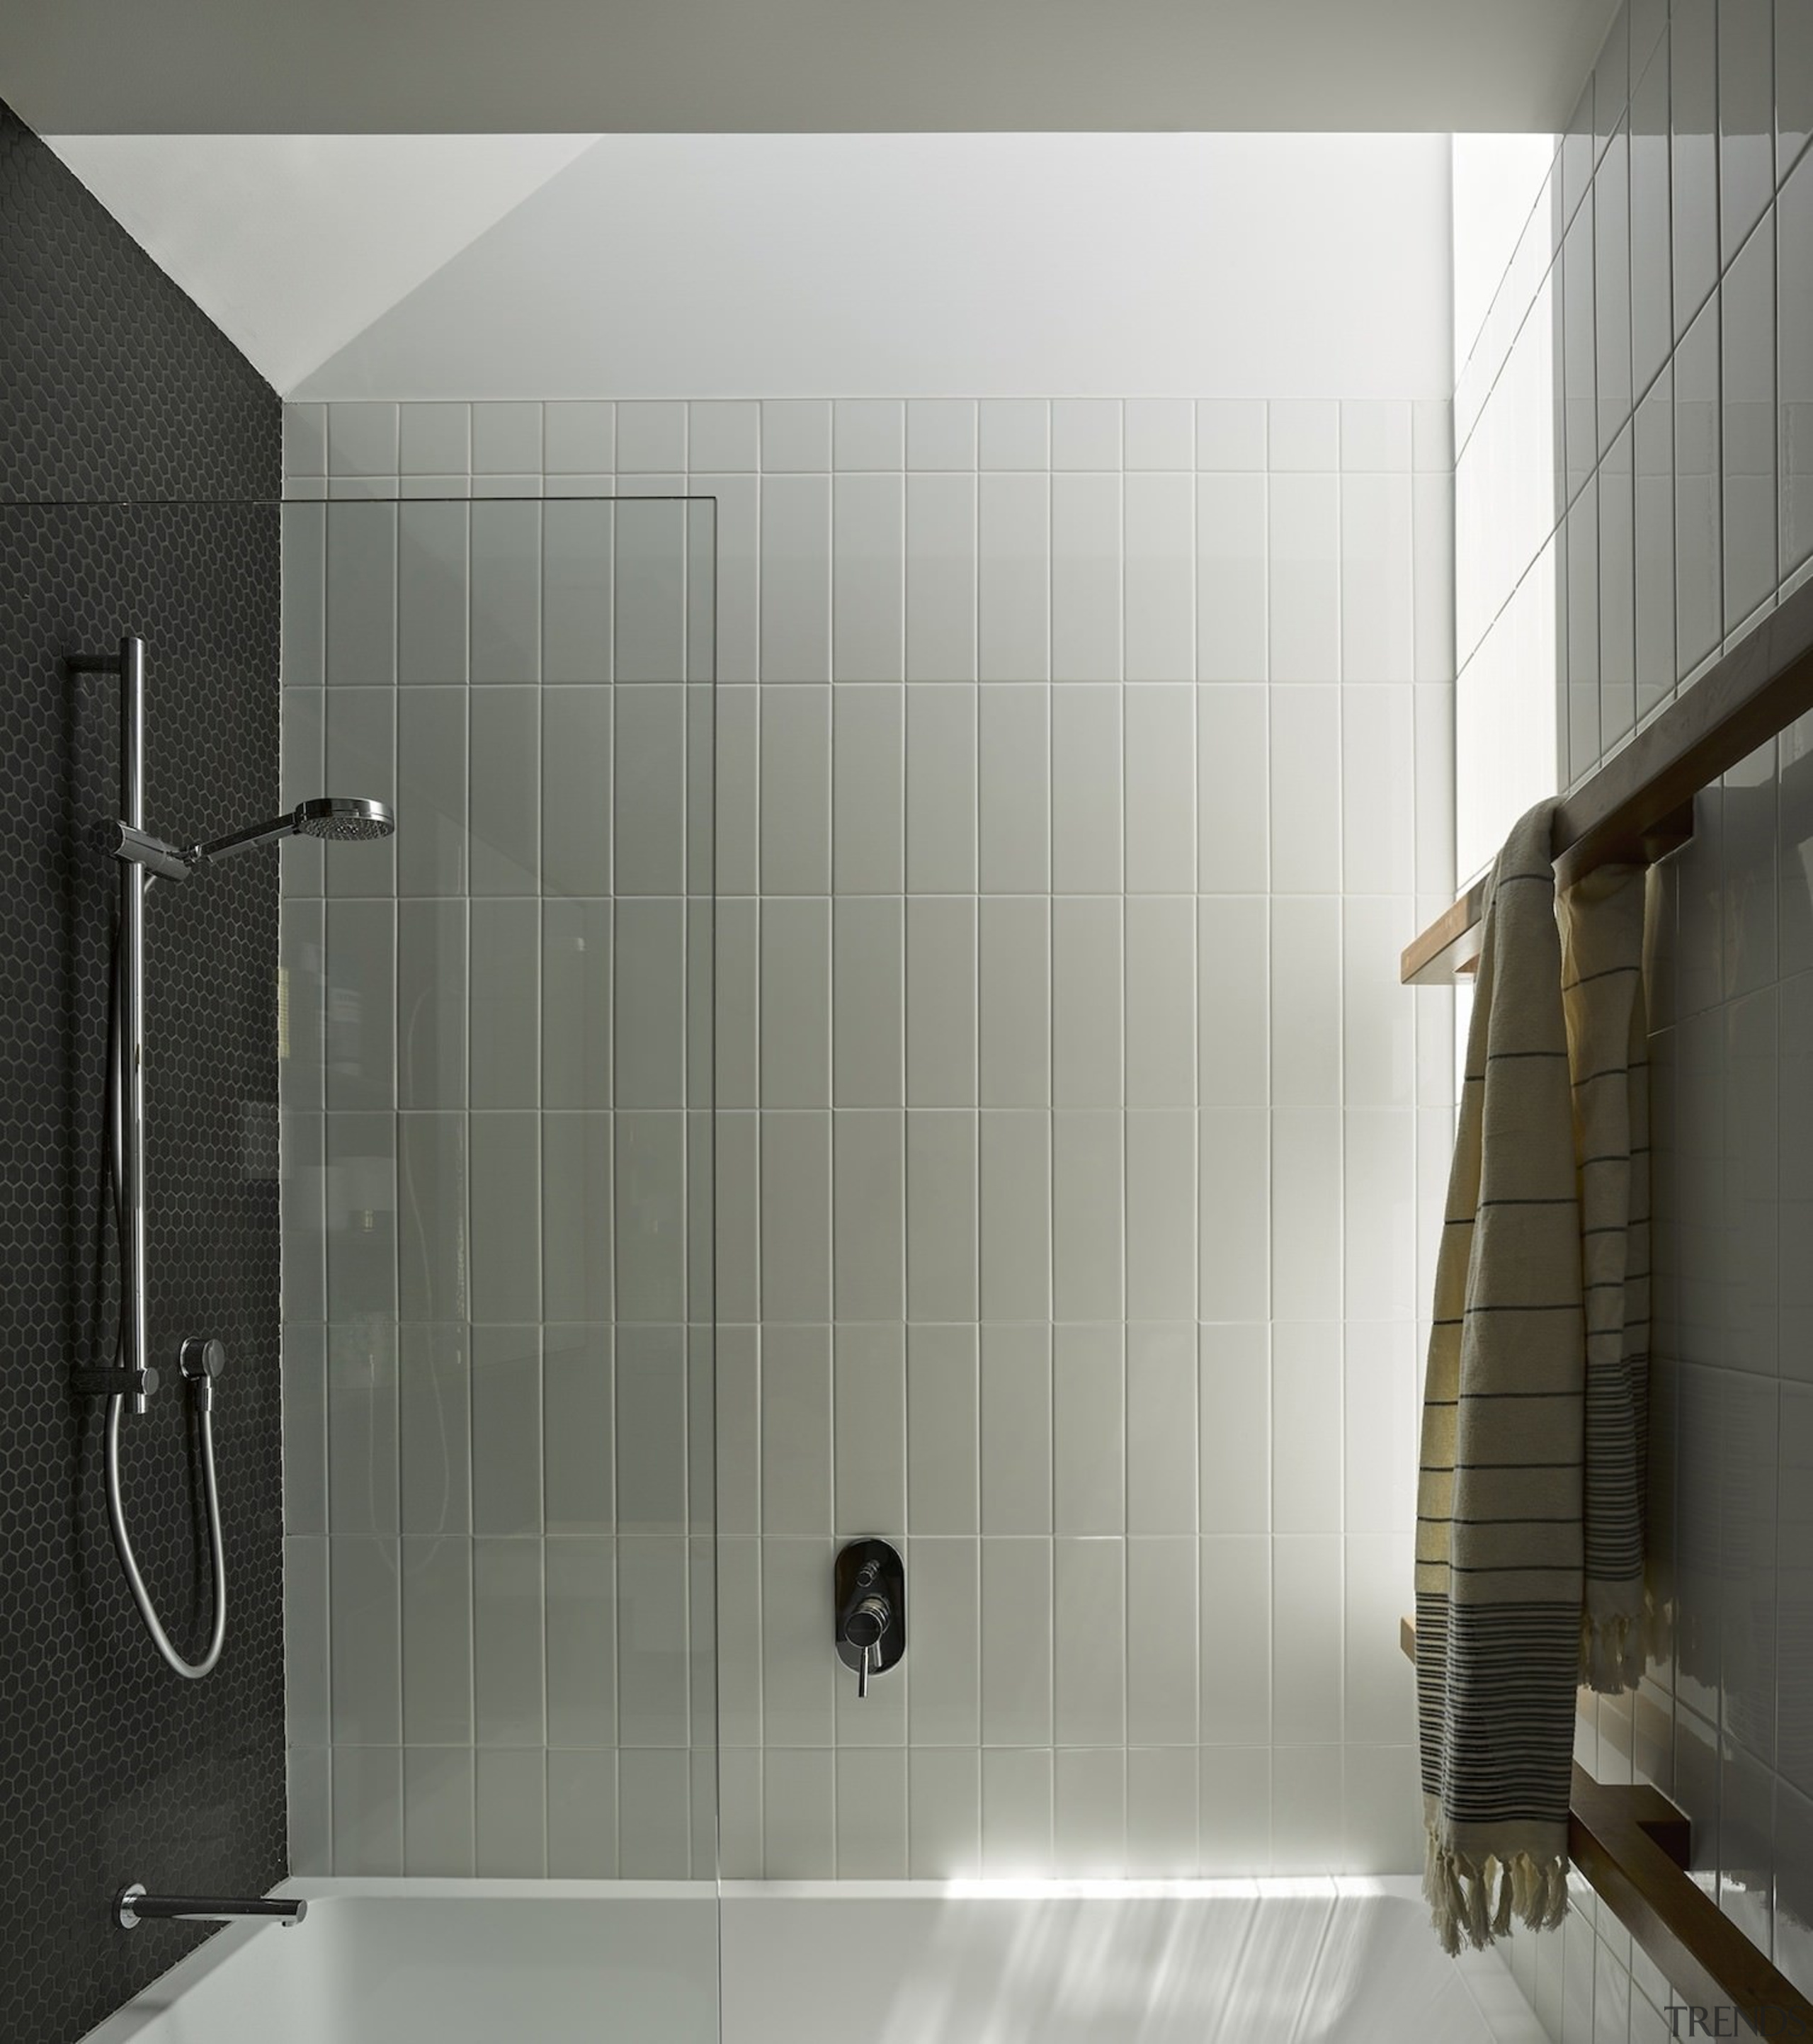 Architect: Refresh DesignPhotography by Roger D’Souza angle, architecture, bathroom, black, floor, flooring, glass, interior design, plumbing fixture, product design, room, shower, shower door, tile, wall, gray